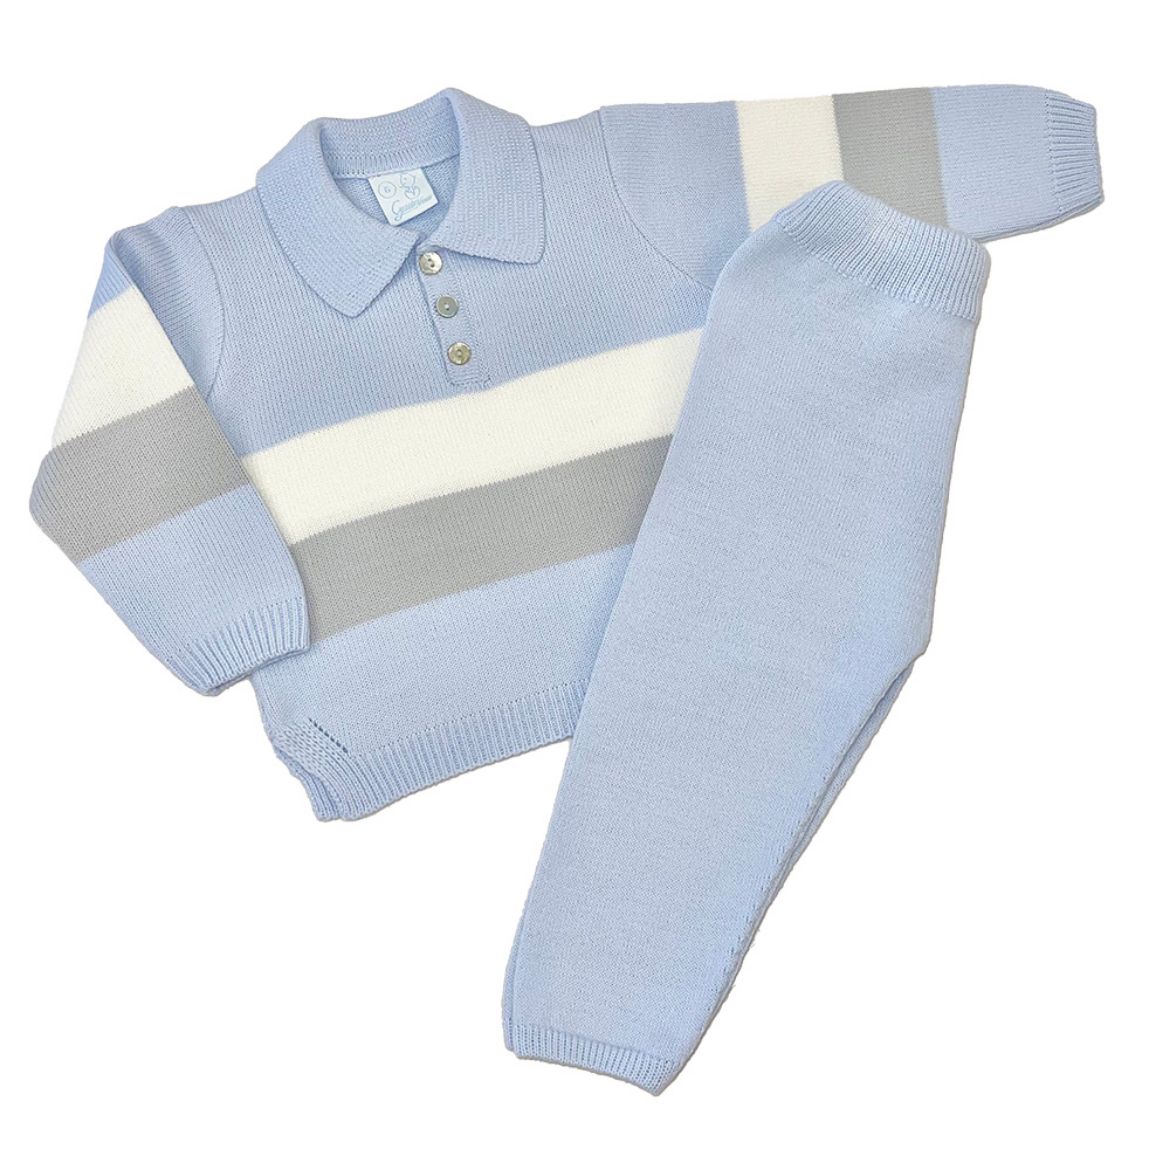 Picture of Granlei Boys Blue, Grey & Cream Striped Set